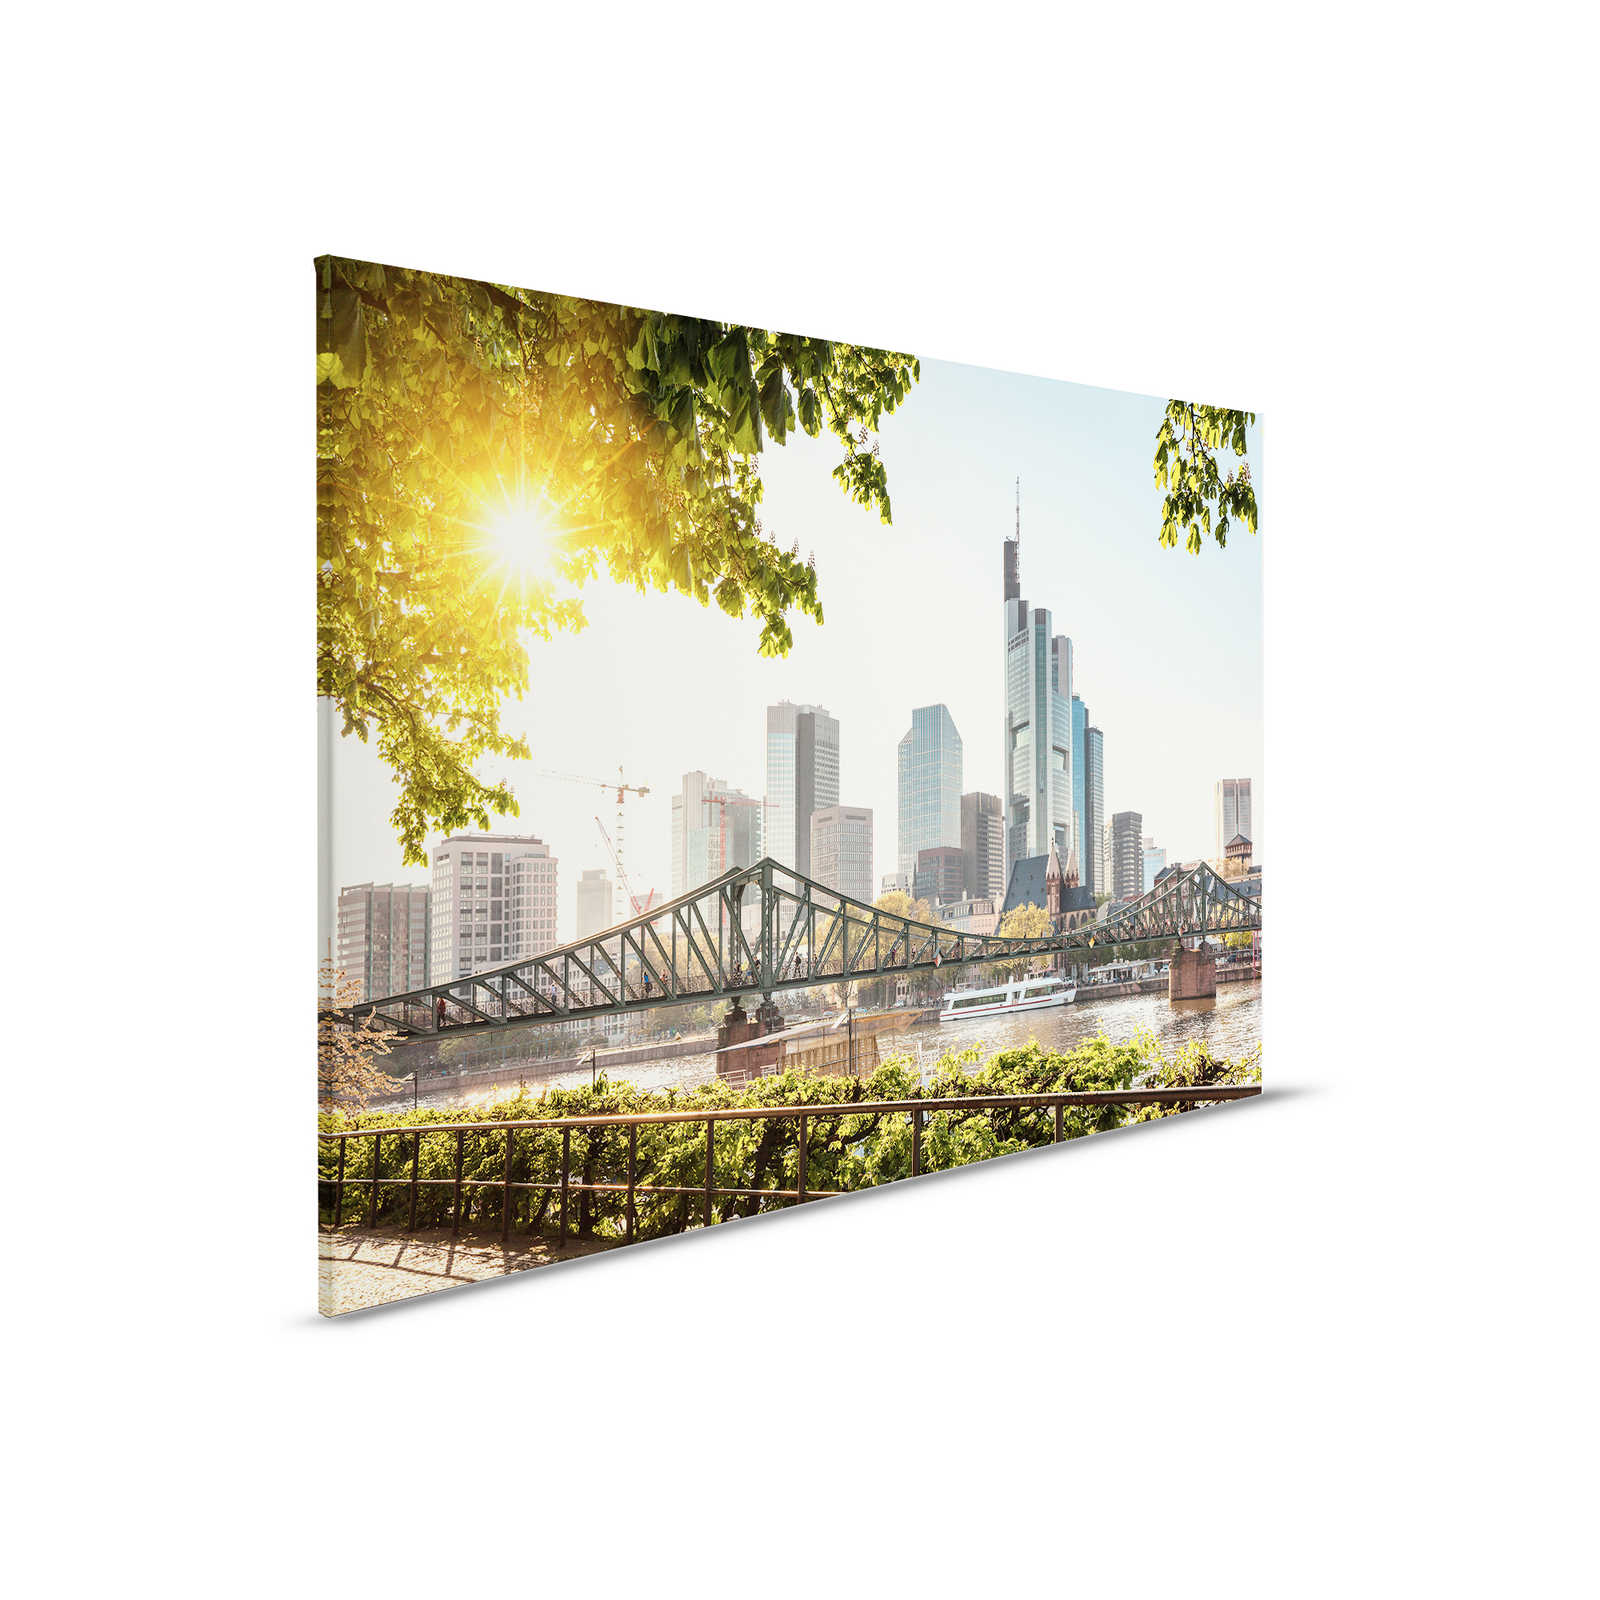         Canvas with Frankfurt Skyline - 0.90 m x 0.60 m
    